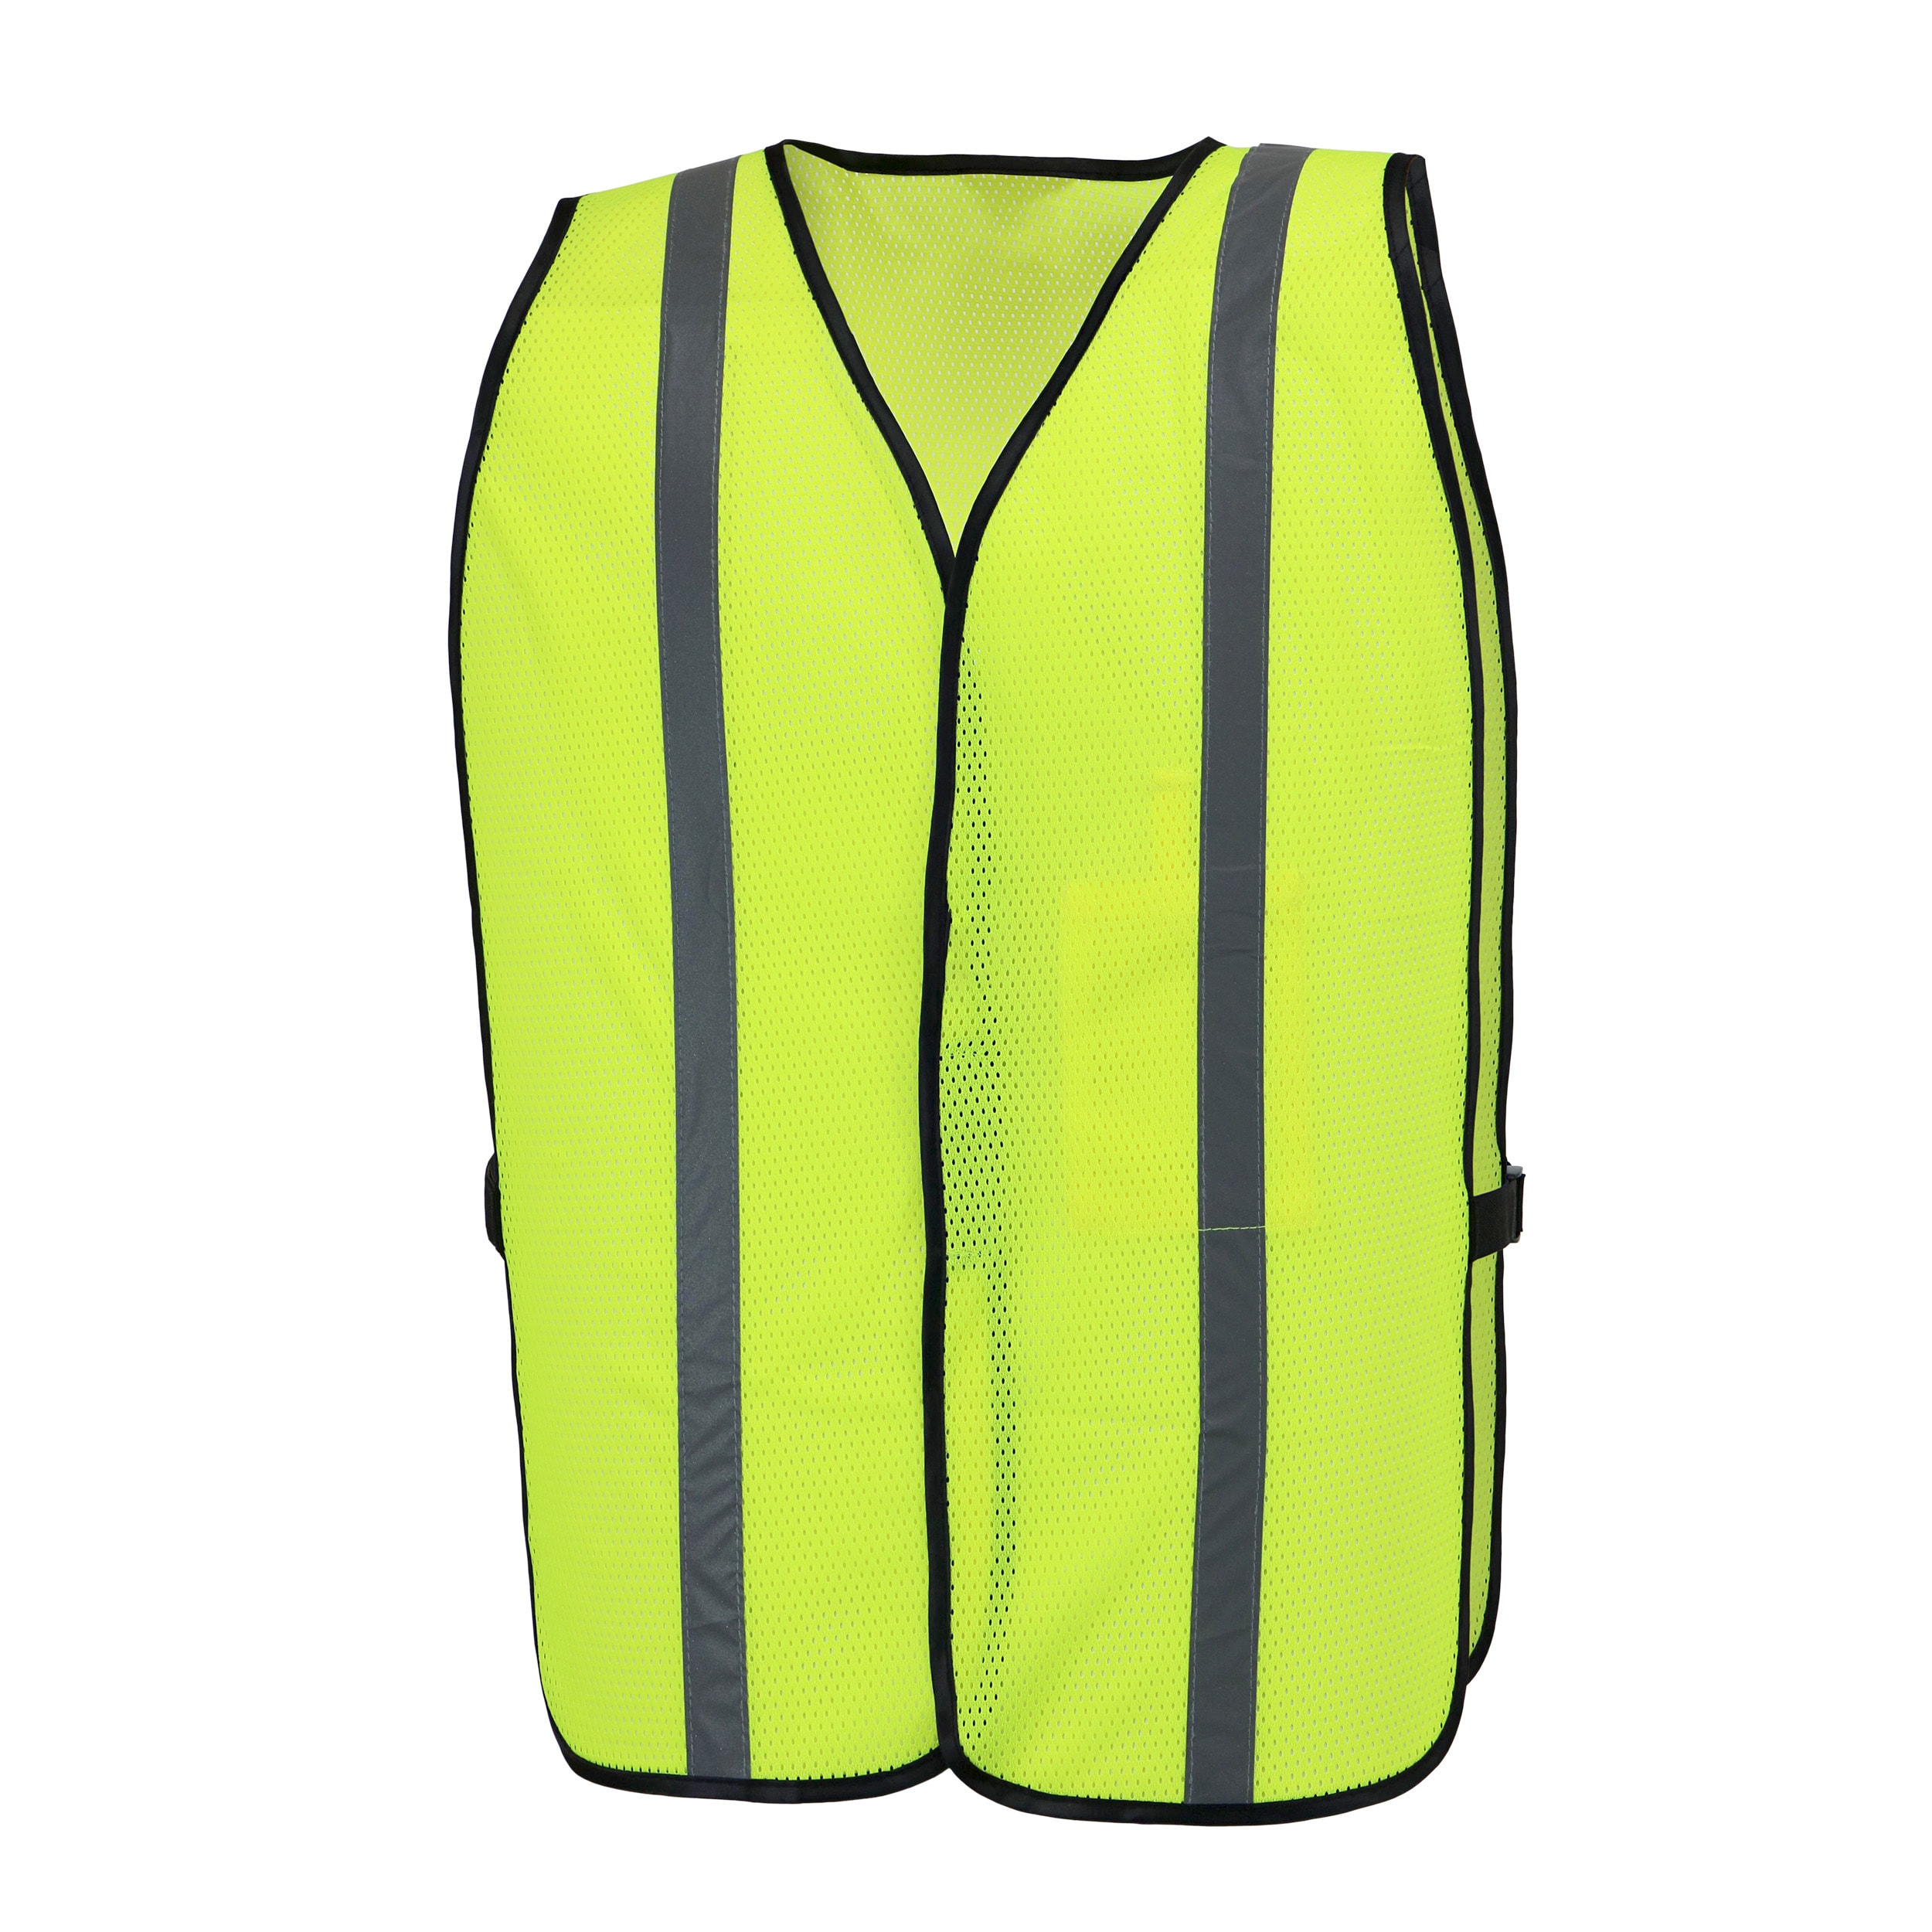 3 x Hi Vis Safety Vests Zipper Pockets Orange/Yellow Warehouse Day/Night Use 